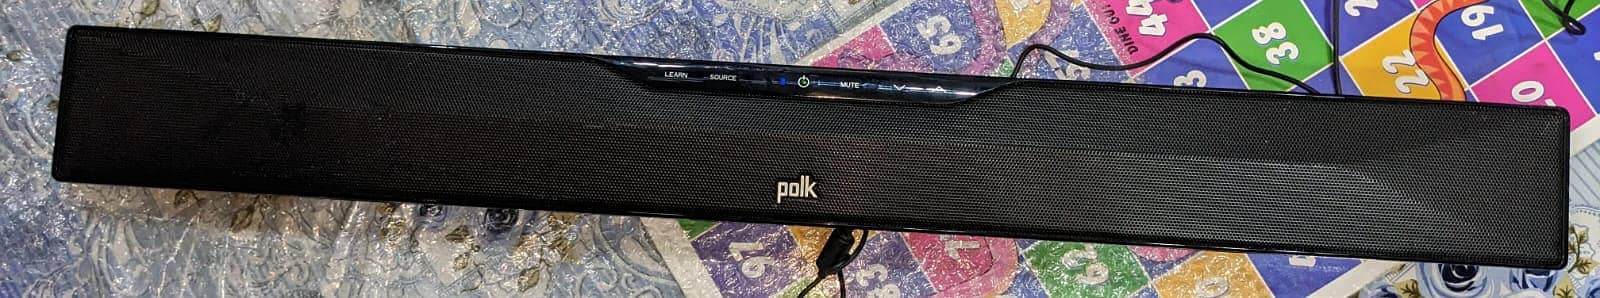 Polk Audio Sound Bar Last piece 0